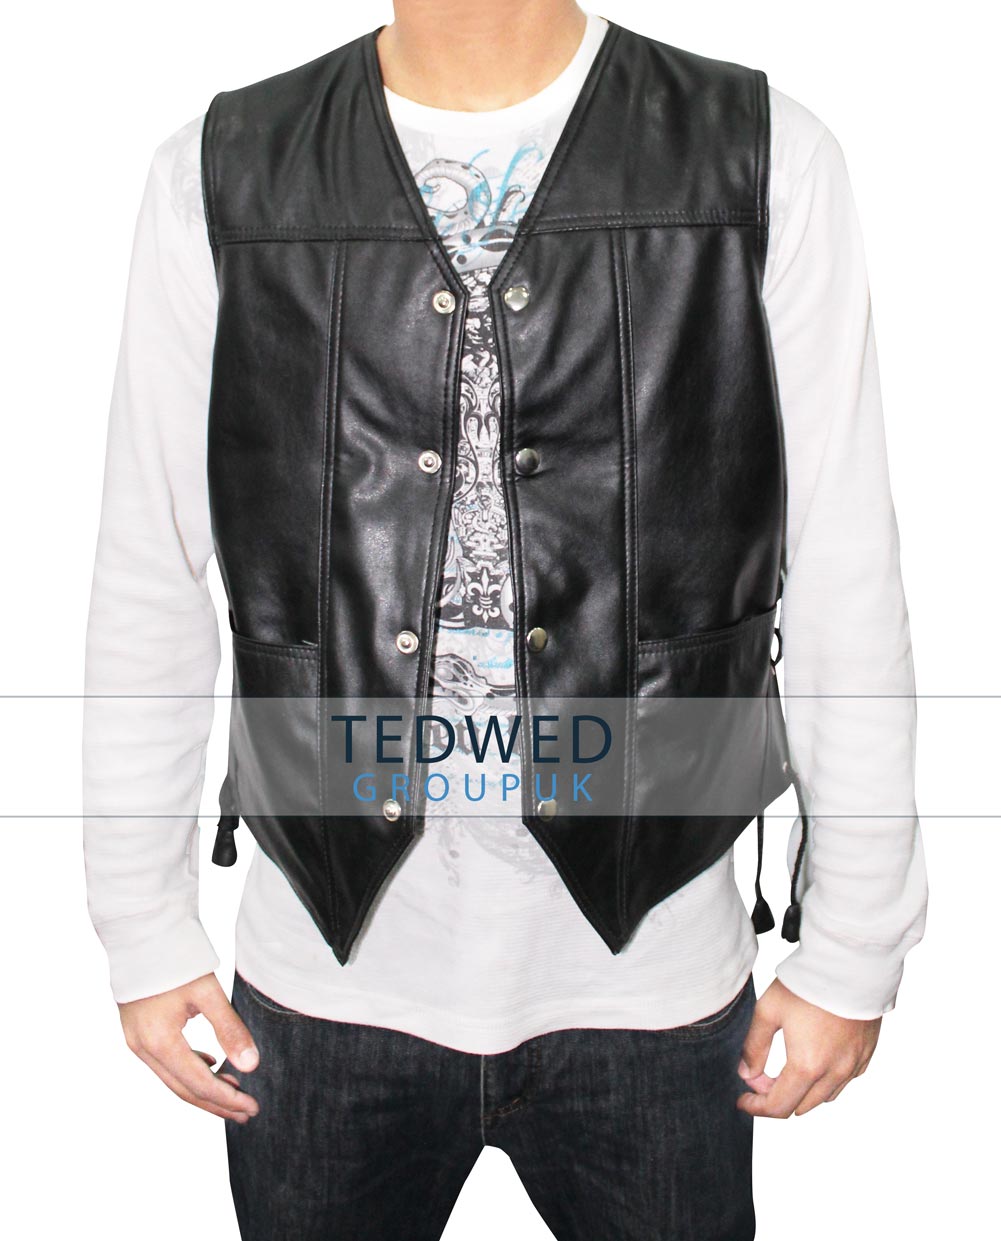 Walking Dead Daryl Dixon Leather Vest - TedWed